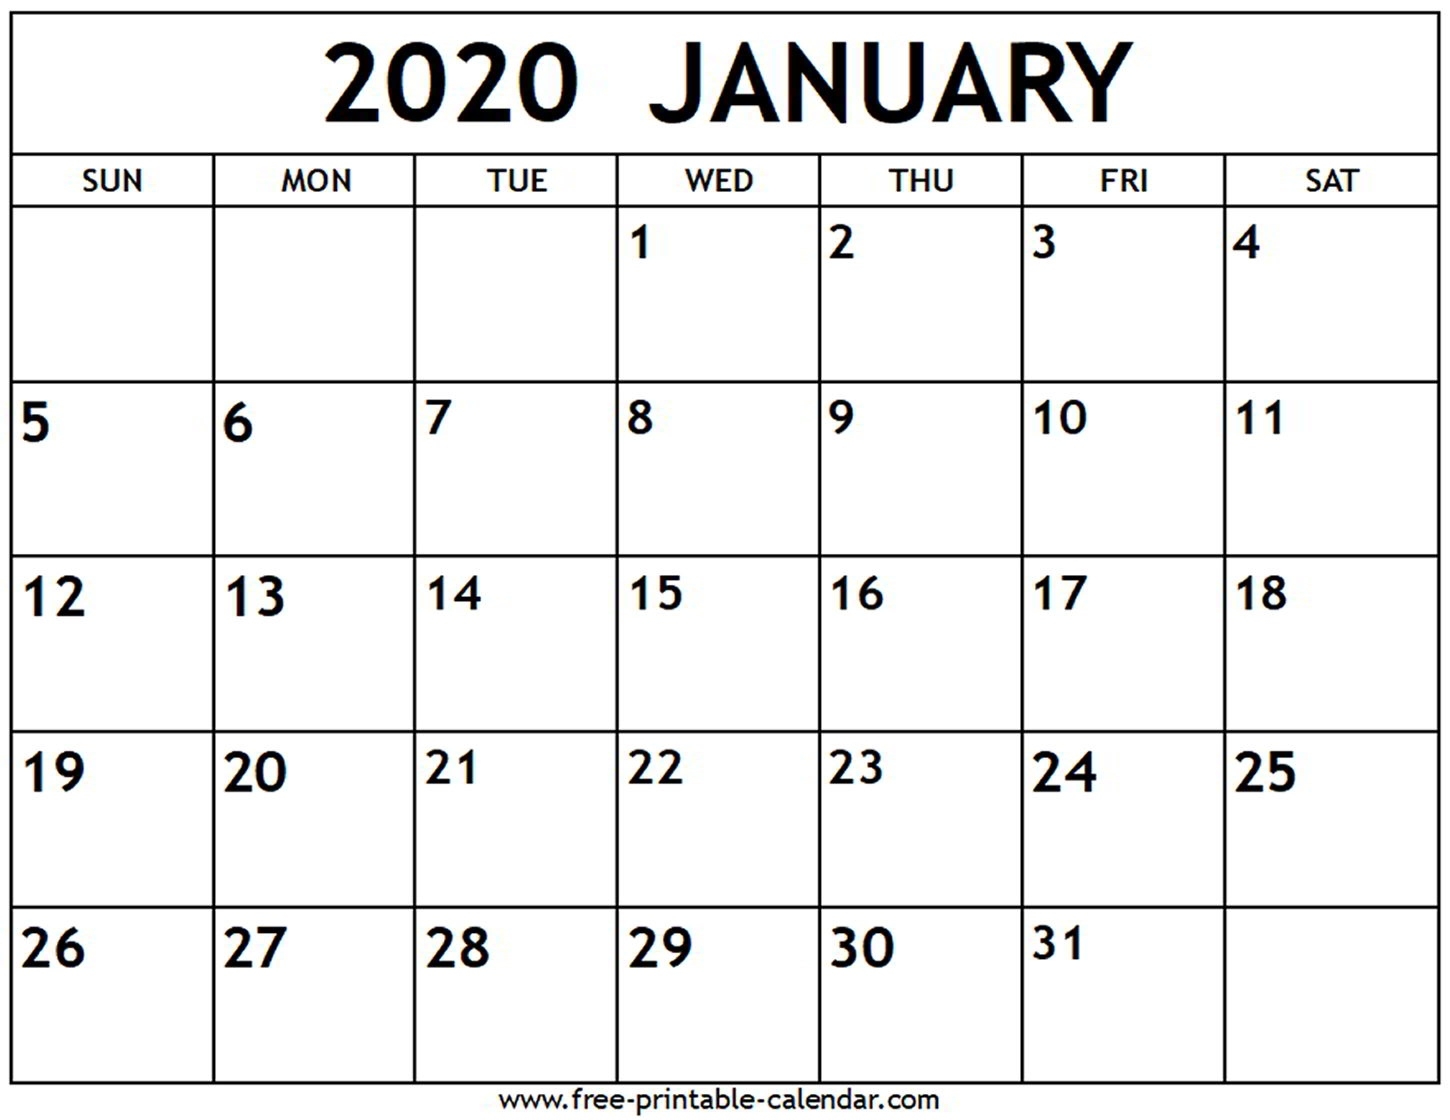 January 2020 Calendar - Free-Printable-Calendar Perky January 2020 Calendar Printable Free